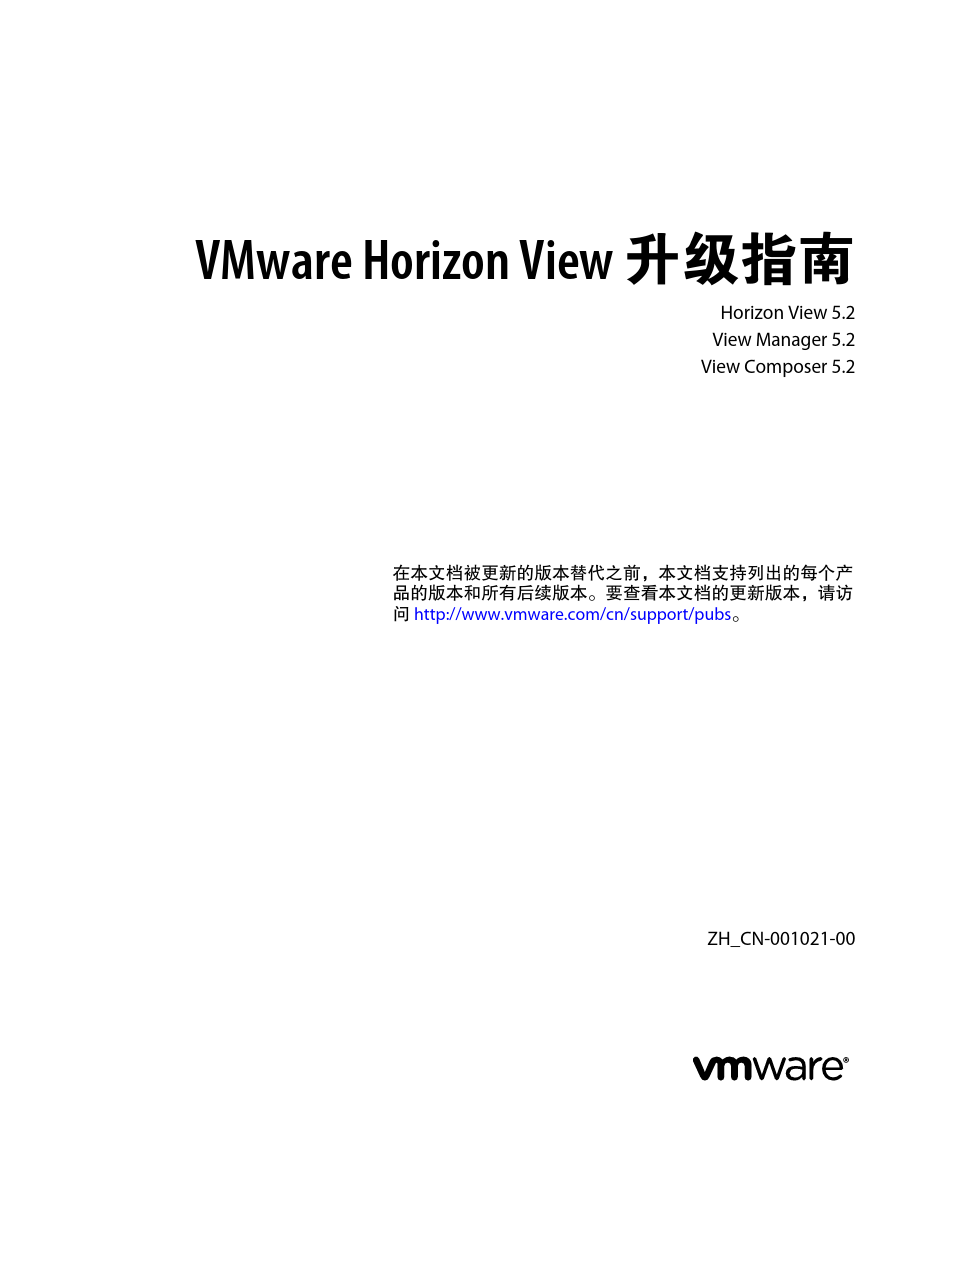 VMware Horizon View 升级指南 - Horizon View 5.2